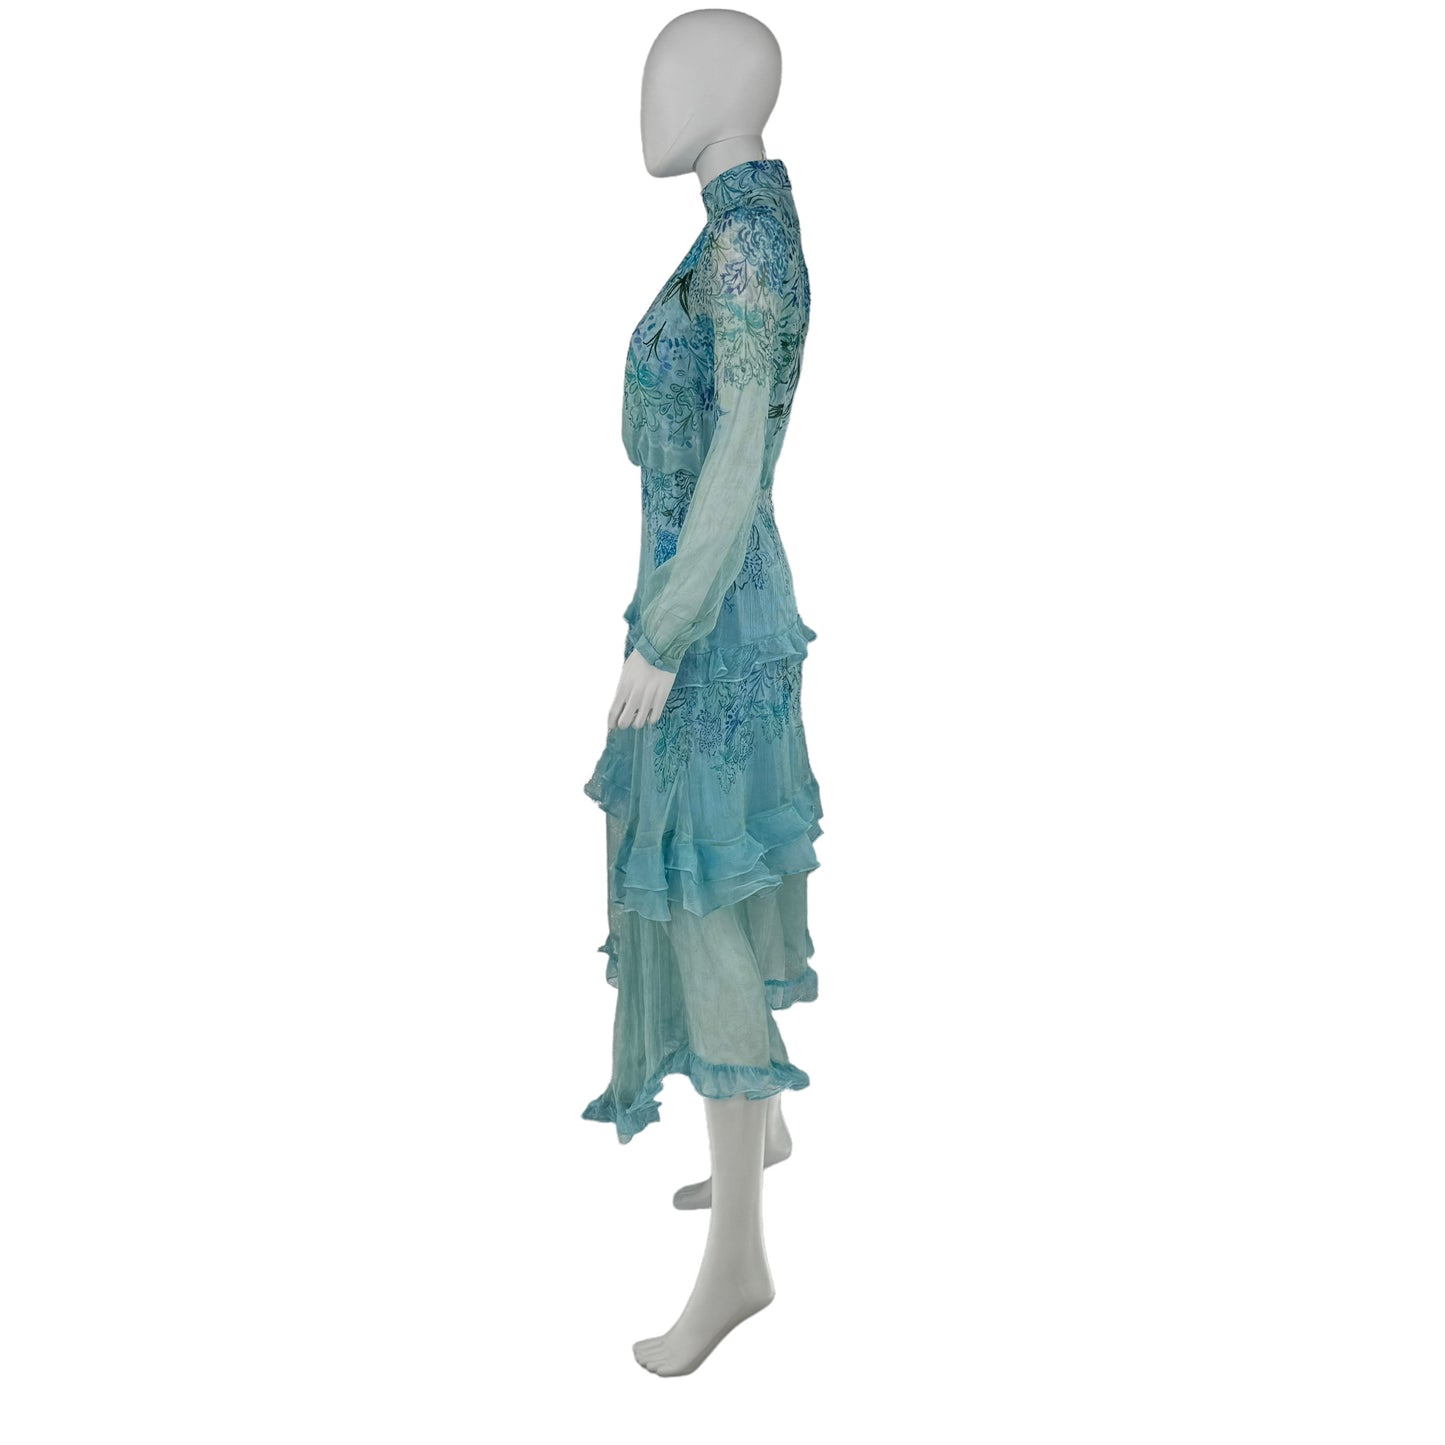 SALONI  Orchard River Jolie-C Dress Formal Silk Long Sleeve Midi Dress